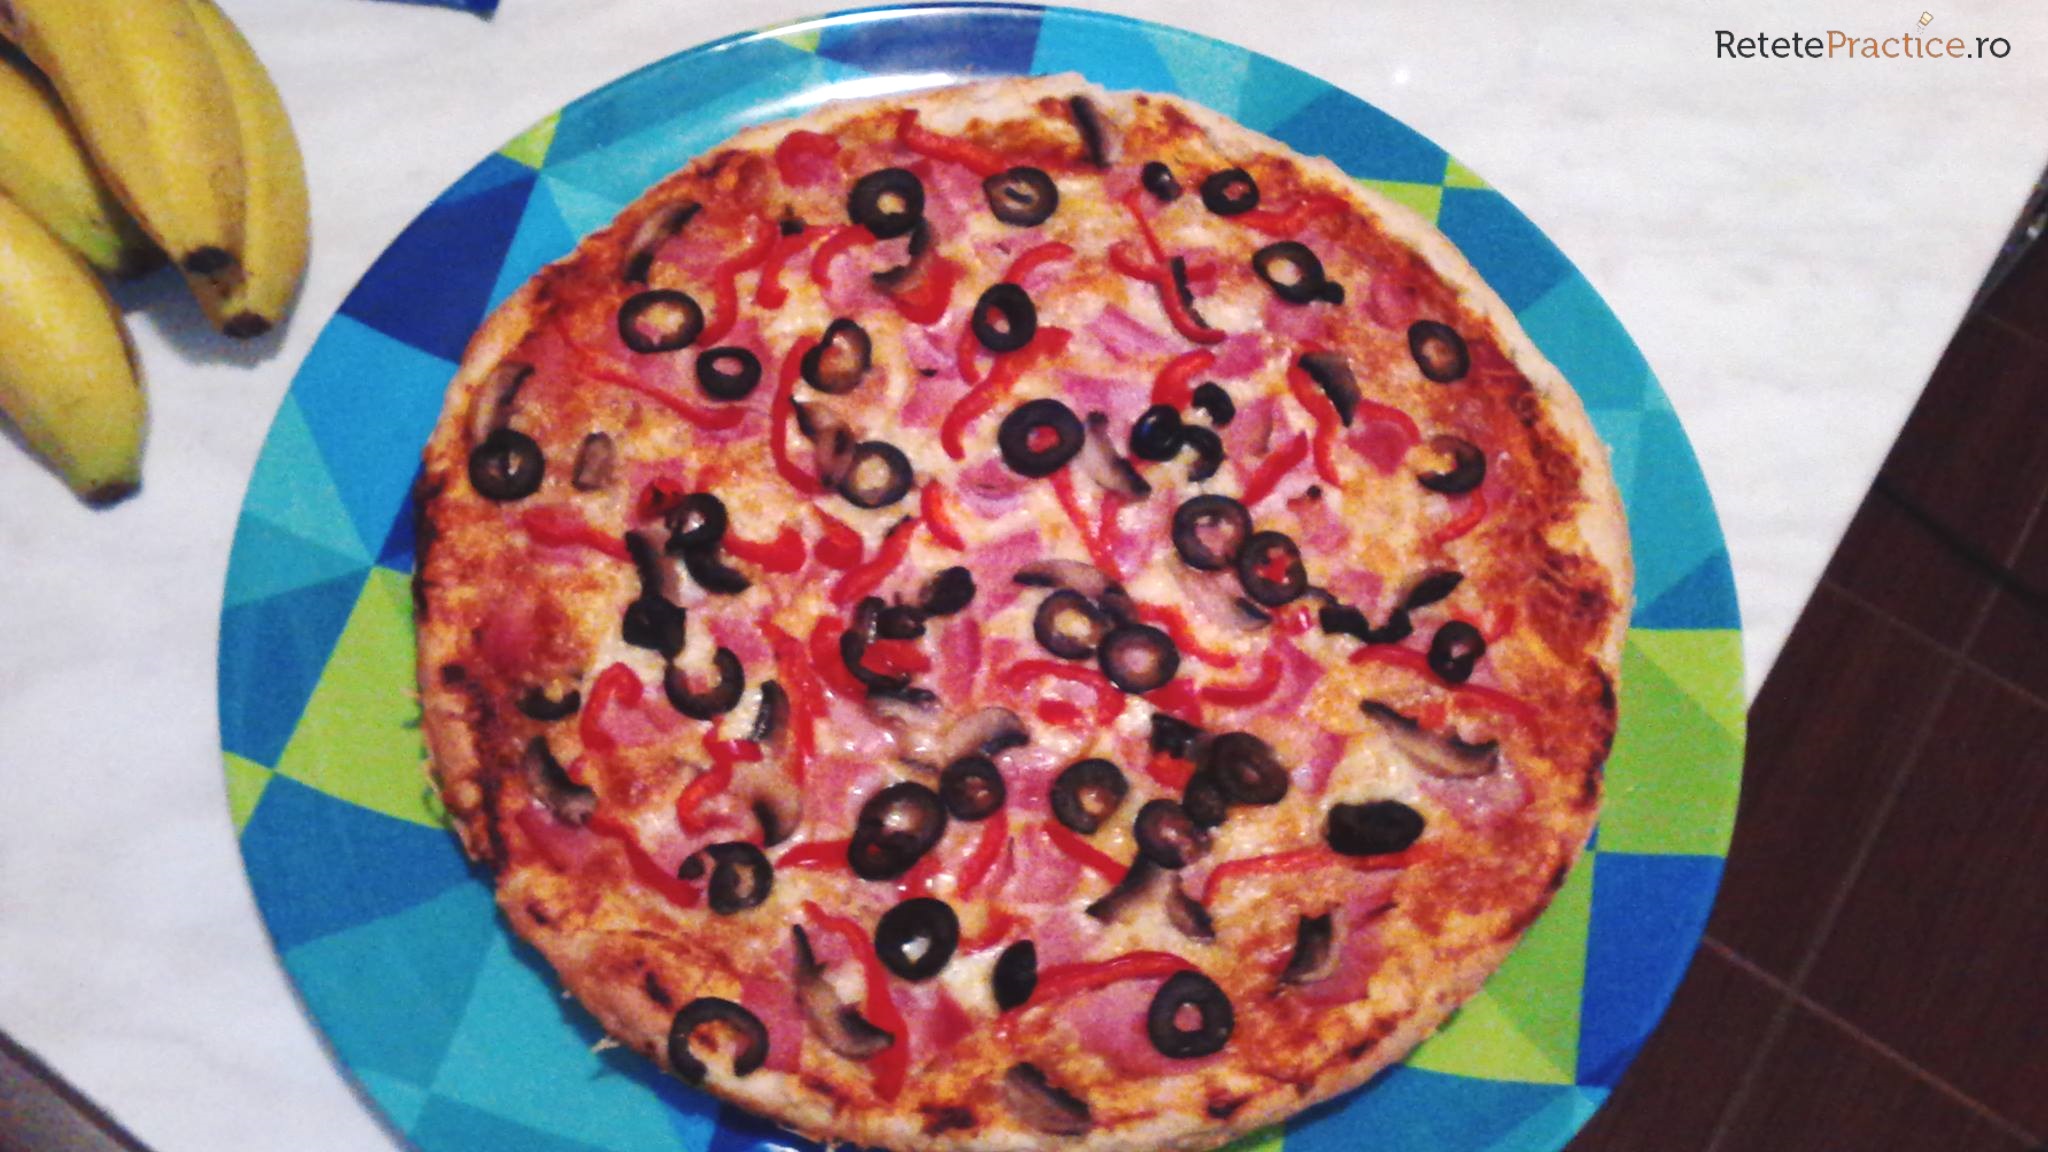 Pizza De Casa Retete Practice